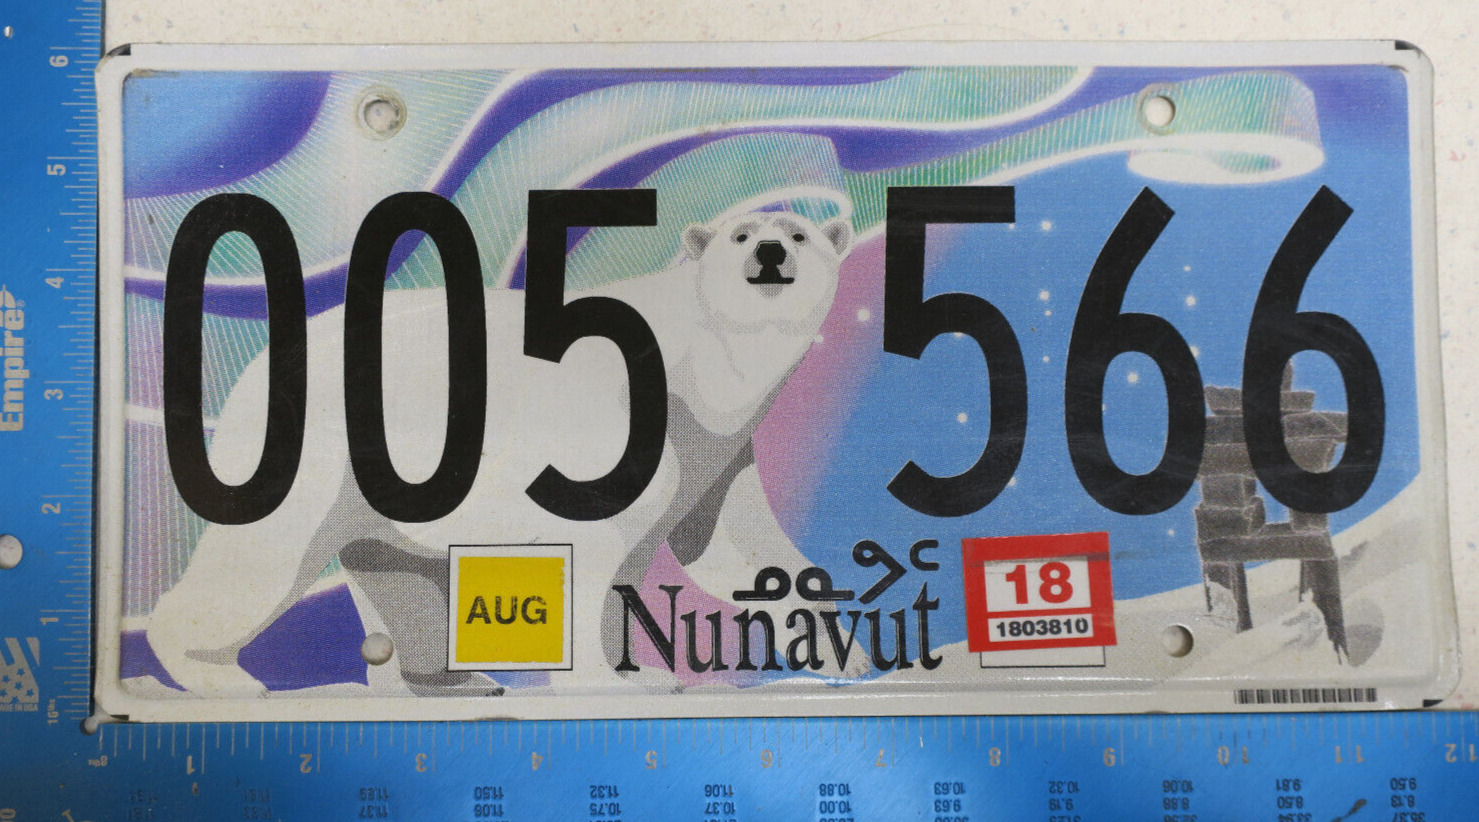 Nunavut License Plate 2018 Passenger Graphic Bear Tag 18 005566 5566